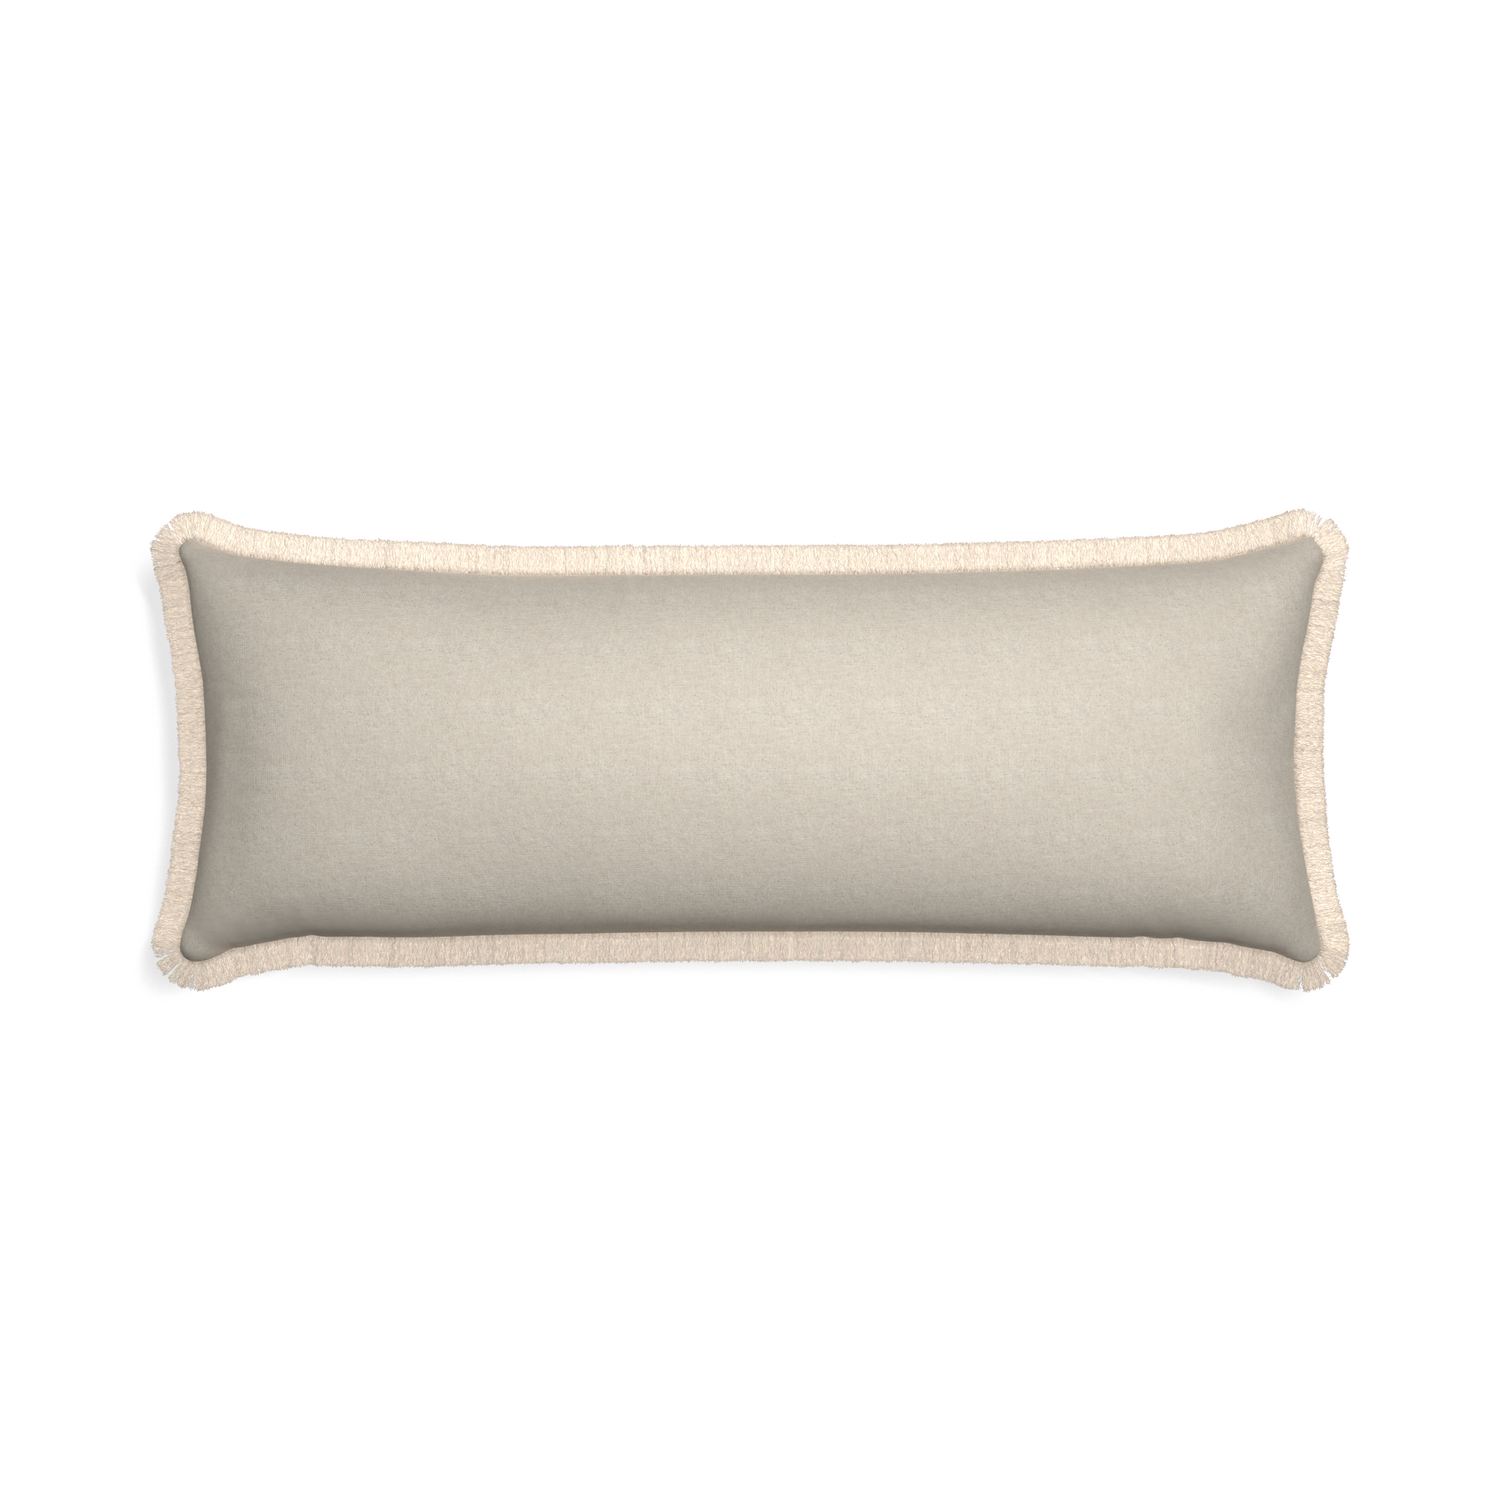 Xl-lumbar oat custom pillow with cream fringe on white background